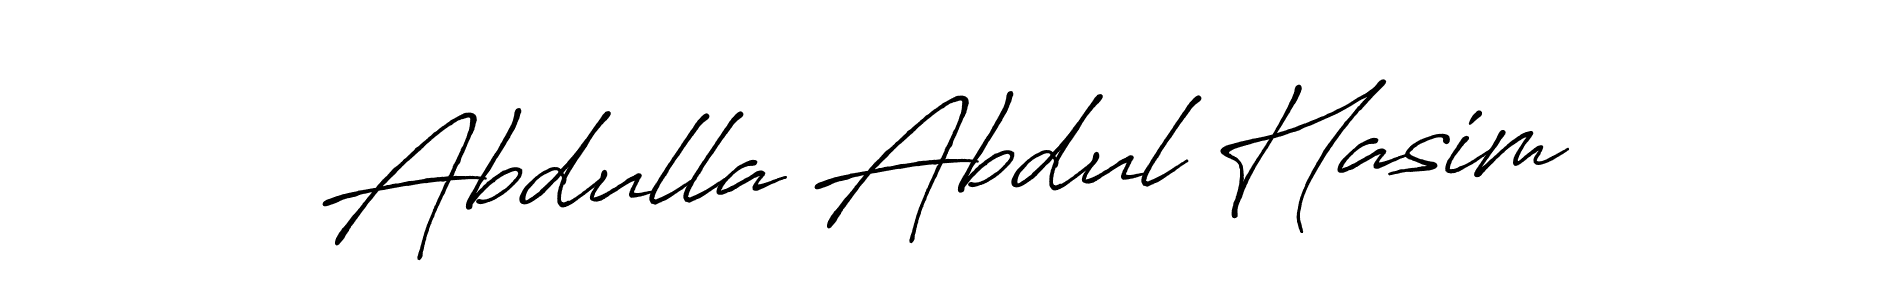 How to Draw Abdulla Abdul Hasim signature style? Antro_Vectra_Bolder is a latest design signature styles for name Abdulla Abdul Hasim. Abdulla Abdul Hasim signature style 7 images and pictures png